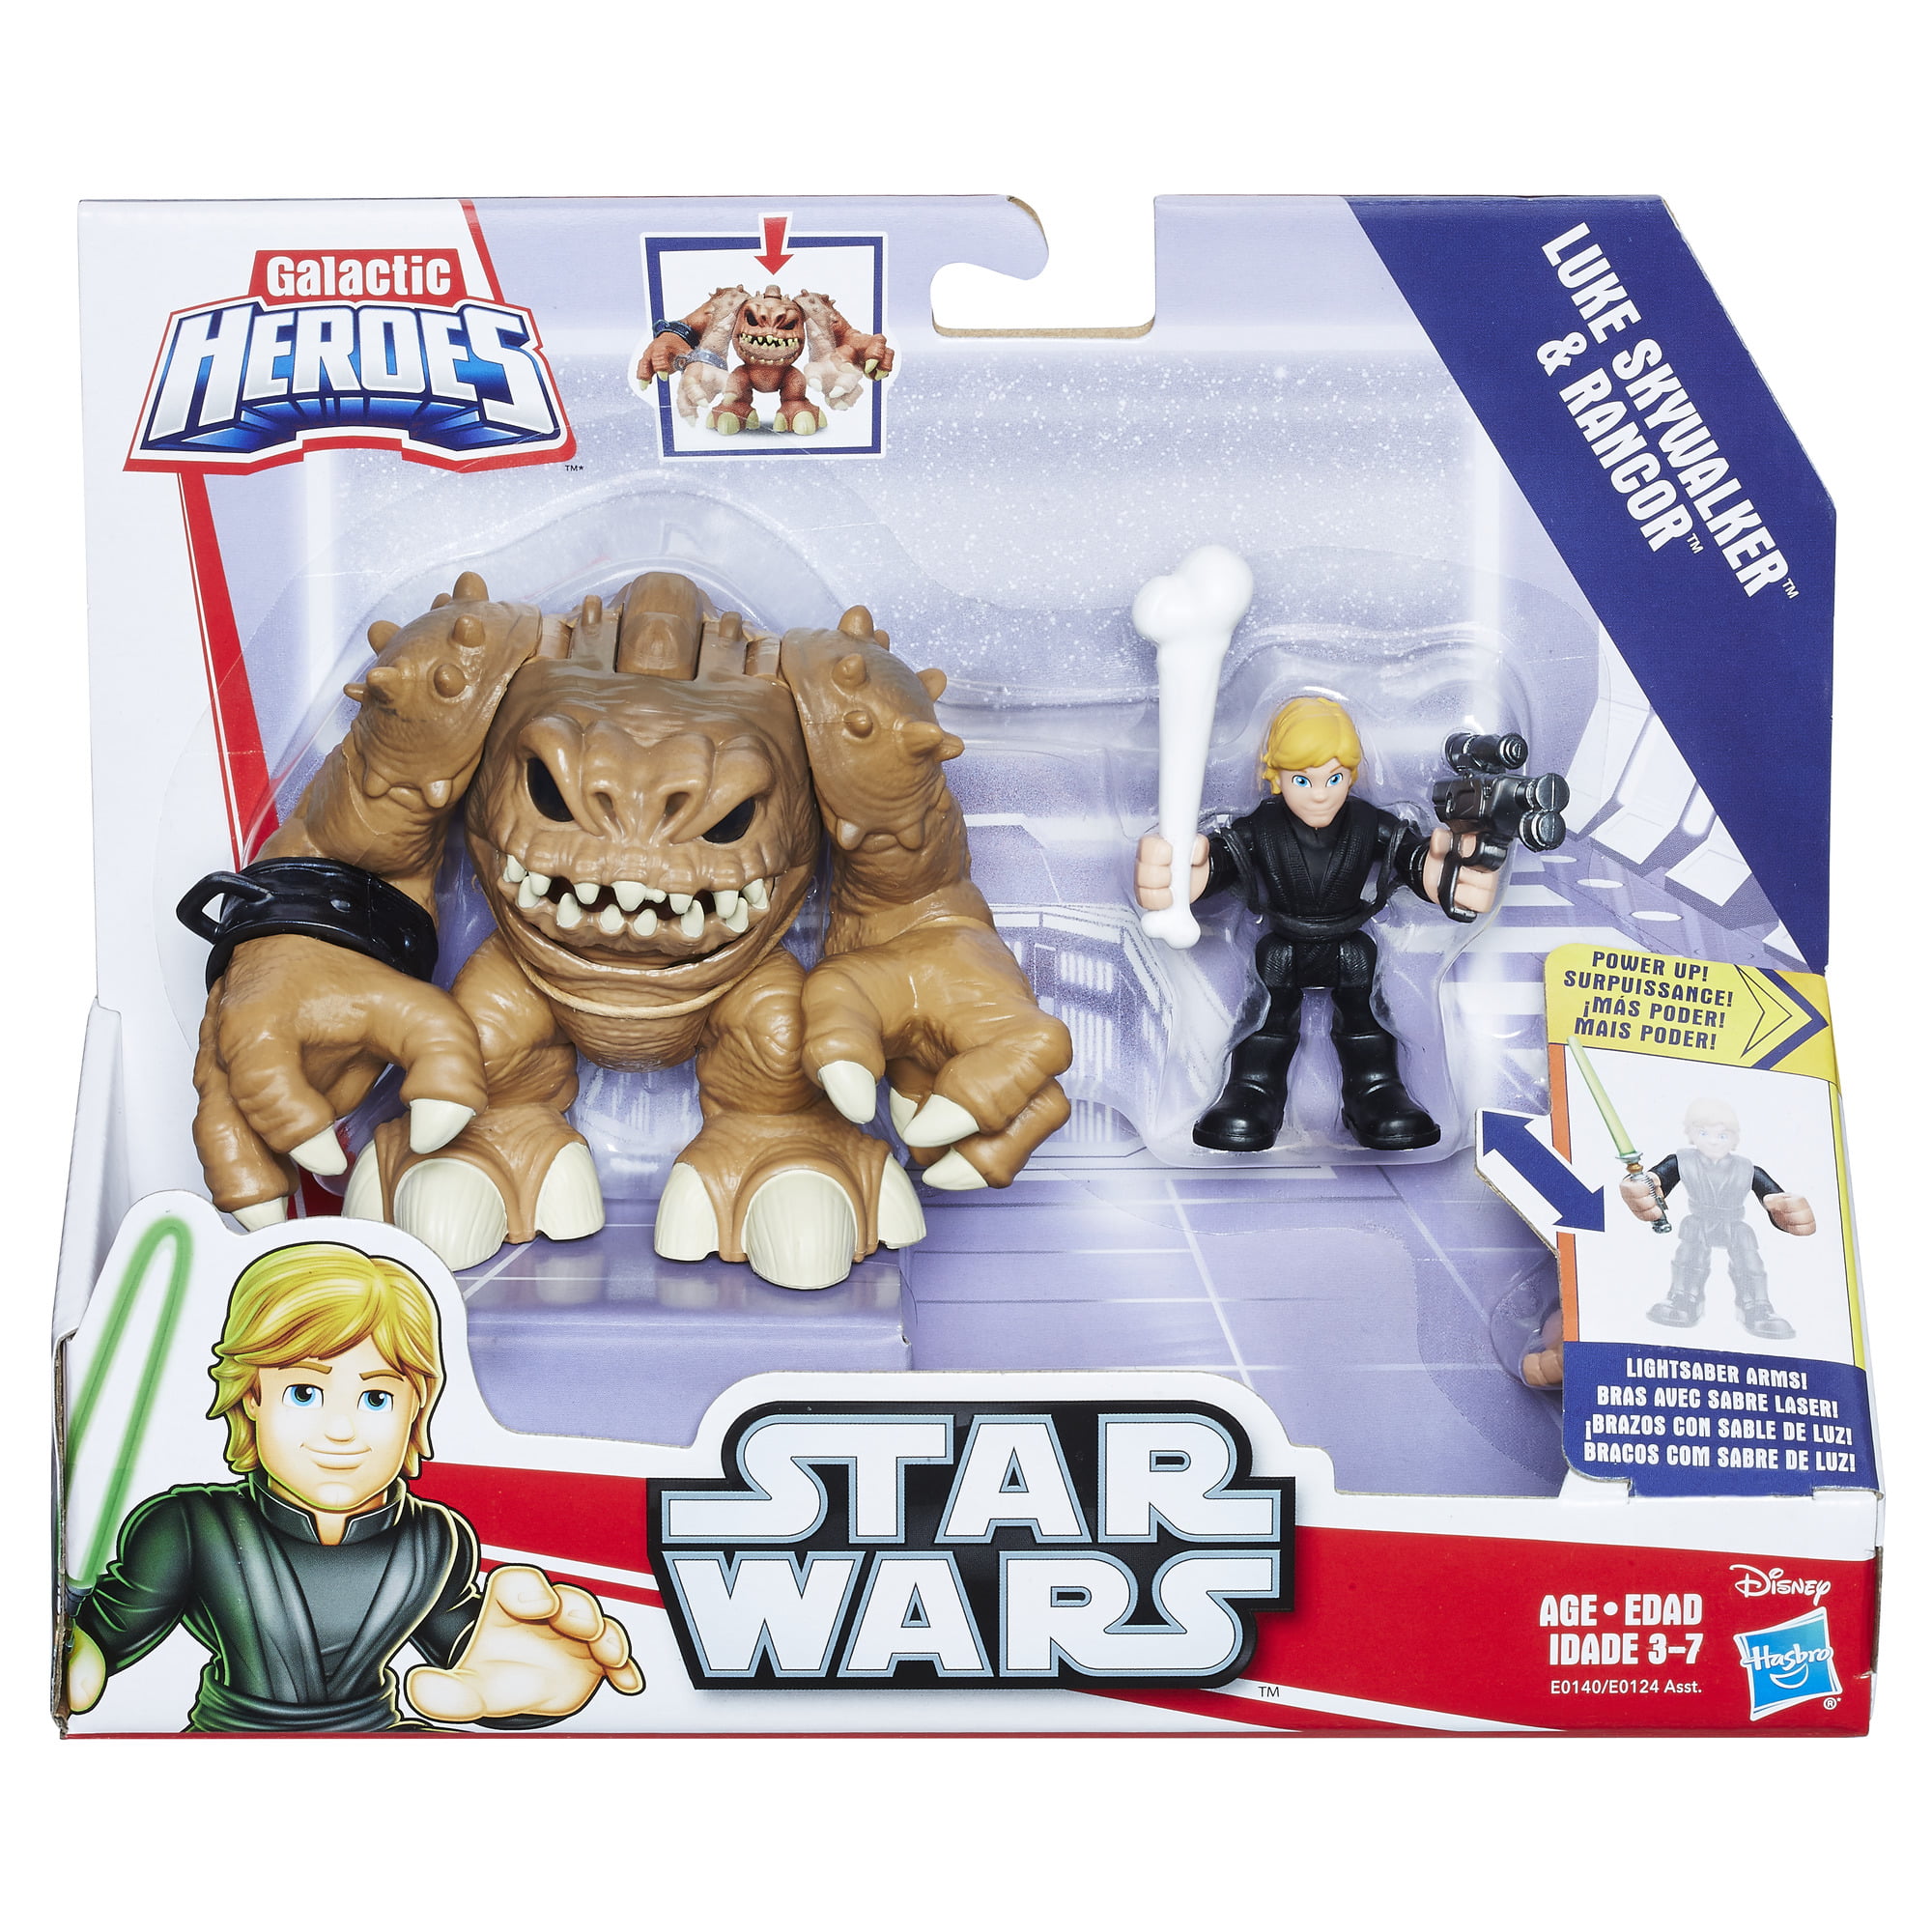 star wars rancor toy value